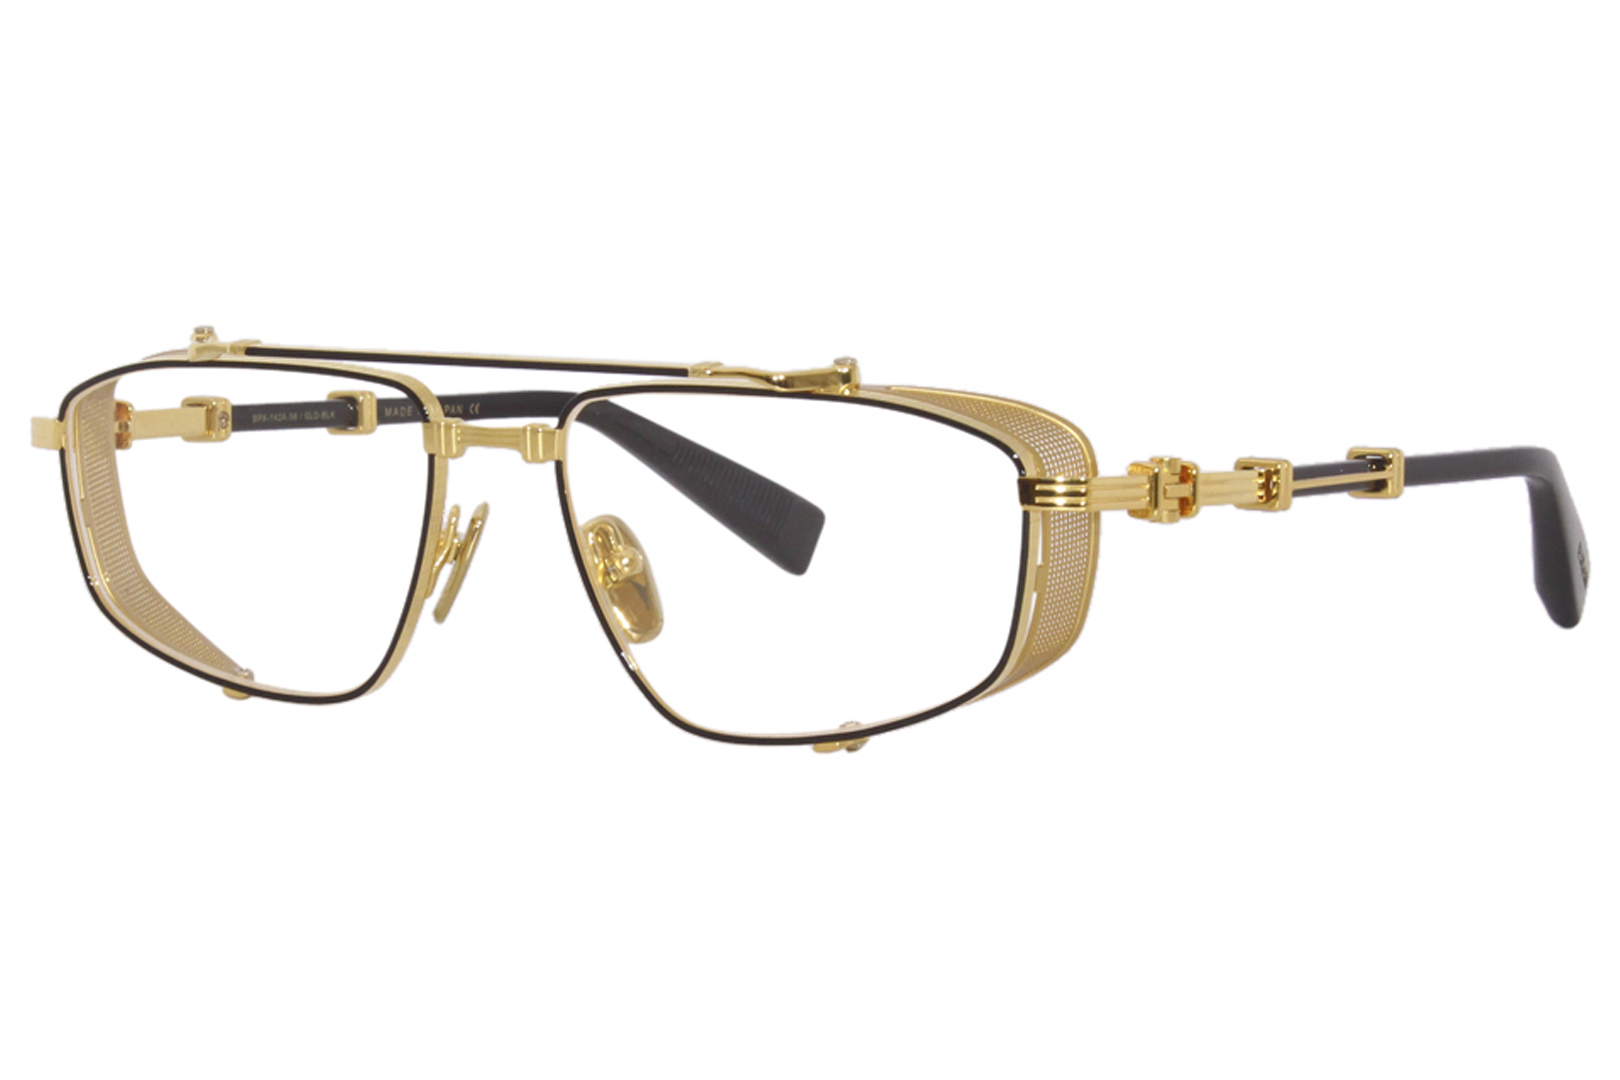 Balmain Brigade V Bpx 142a Titanium Eyeglasses Gold Black Full Rim 56 17 140